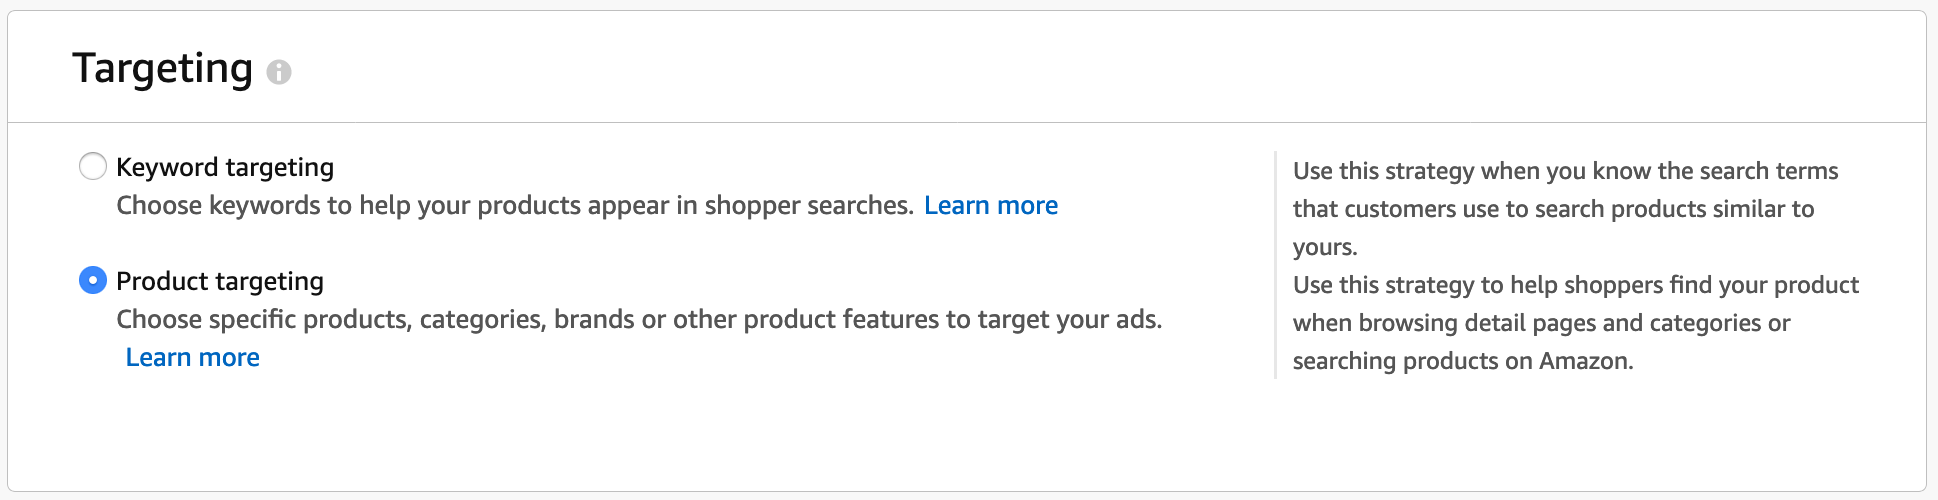 Amazon Ads Product Targeting 